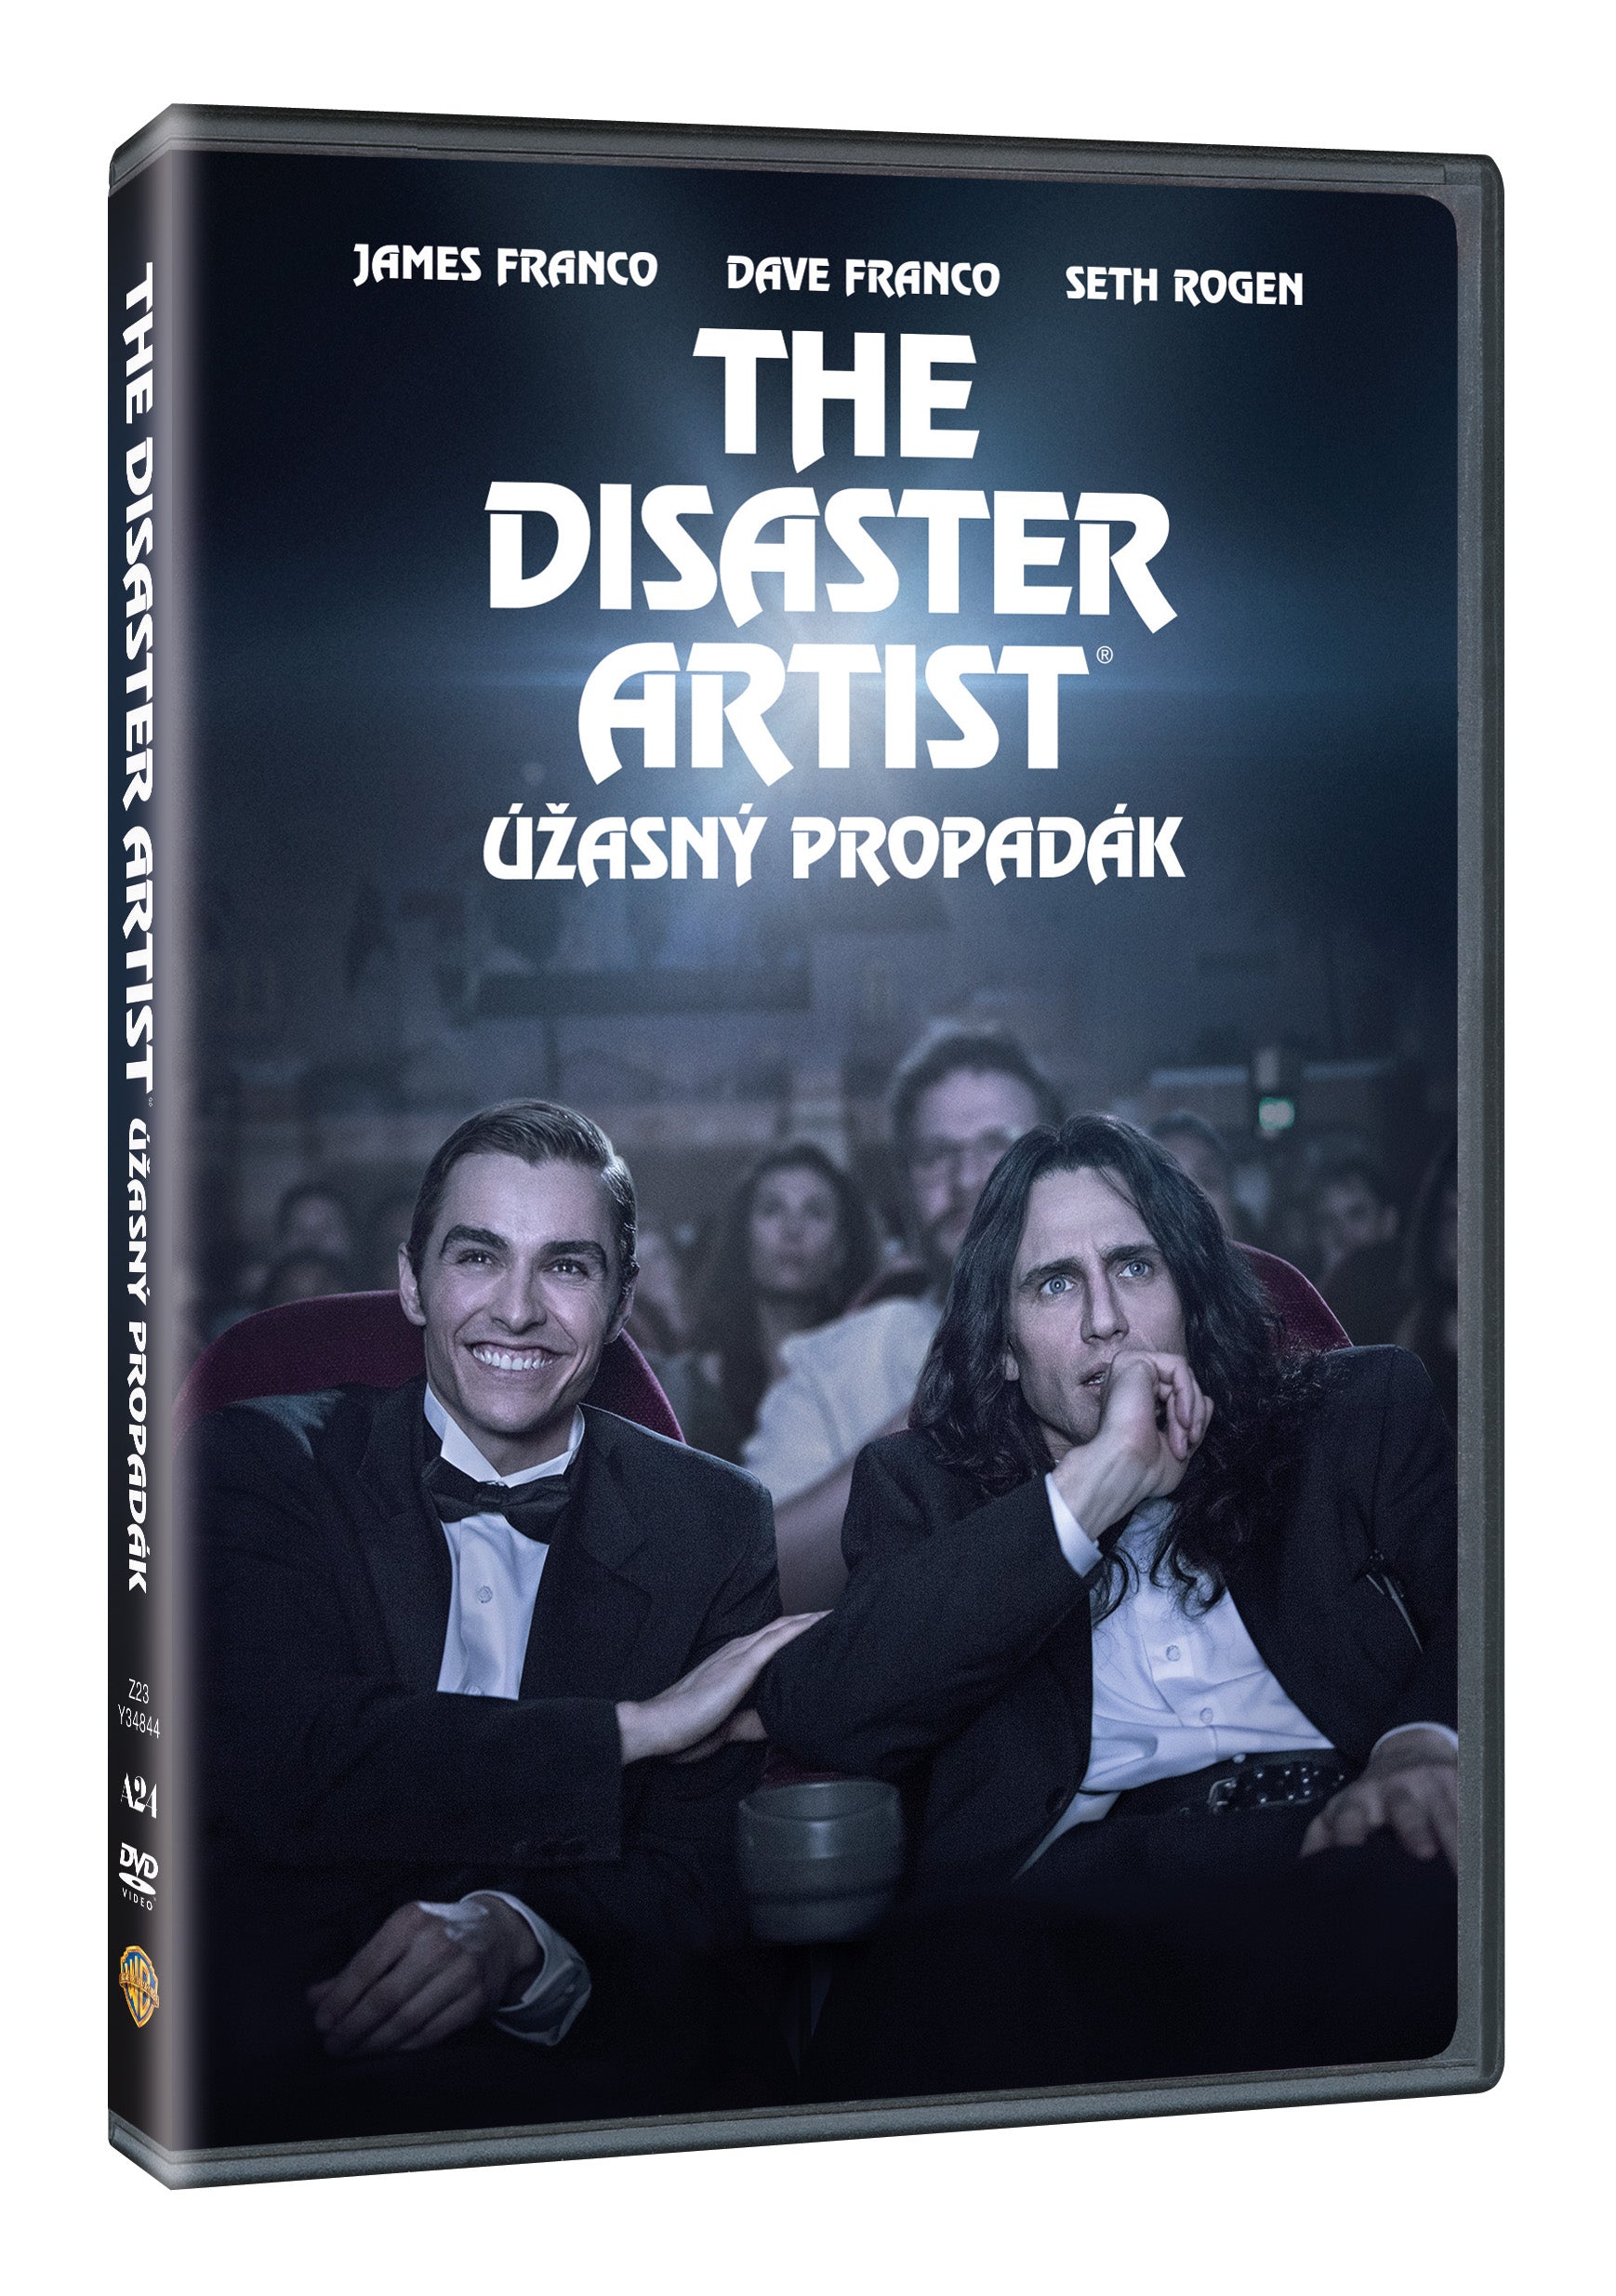 The Disaster Artist: Uzasny propadak DVD / The Disaster Artist